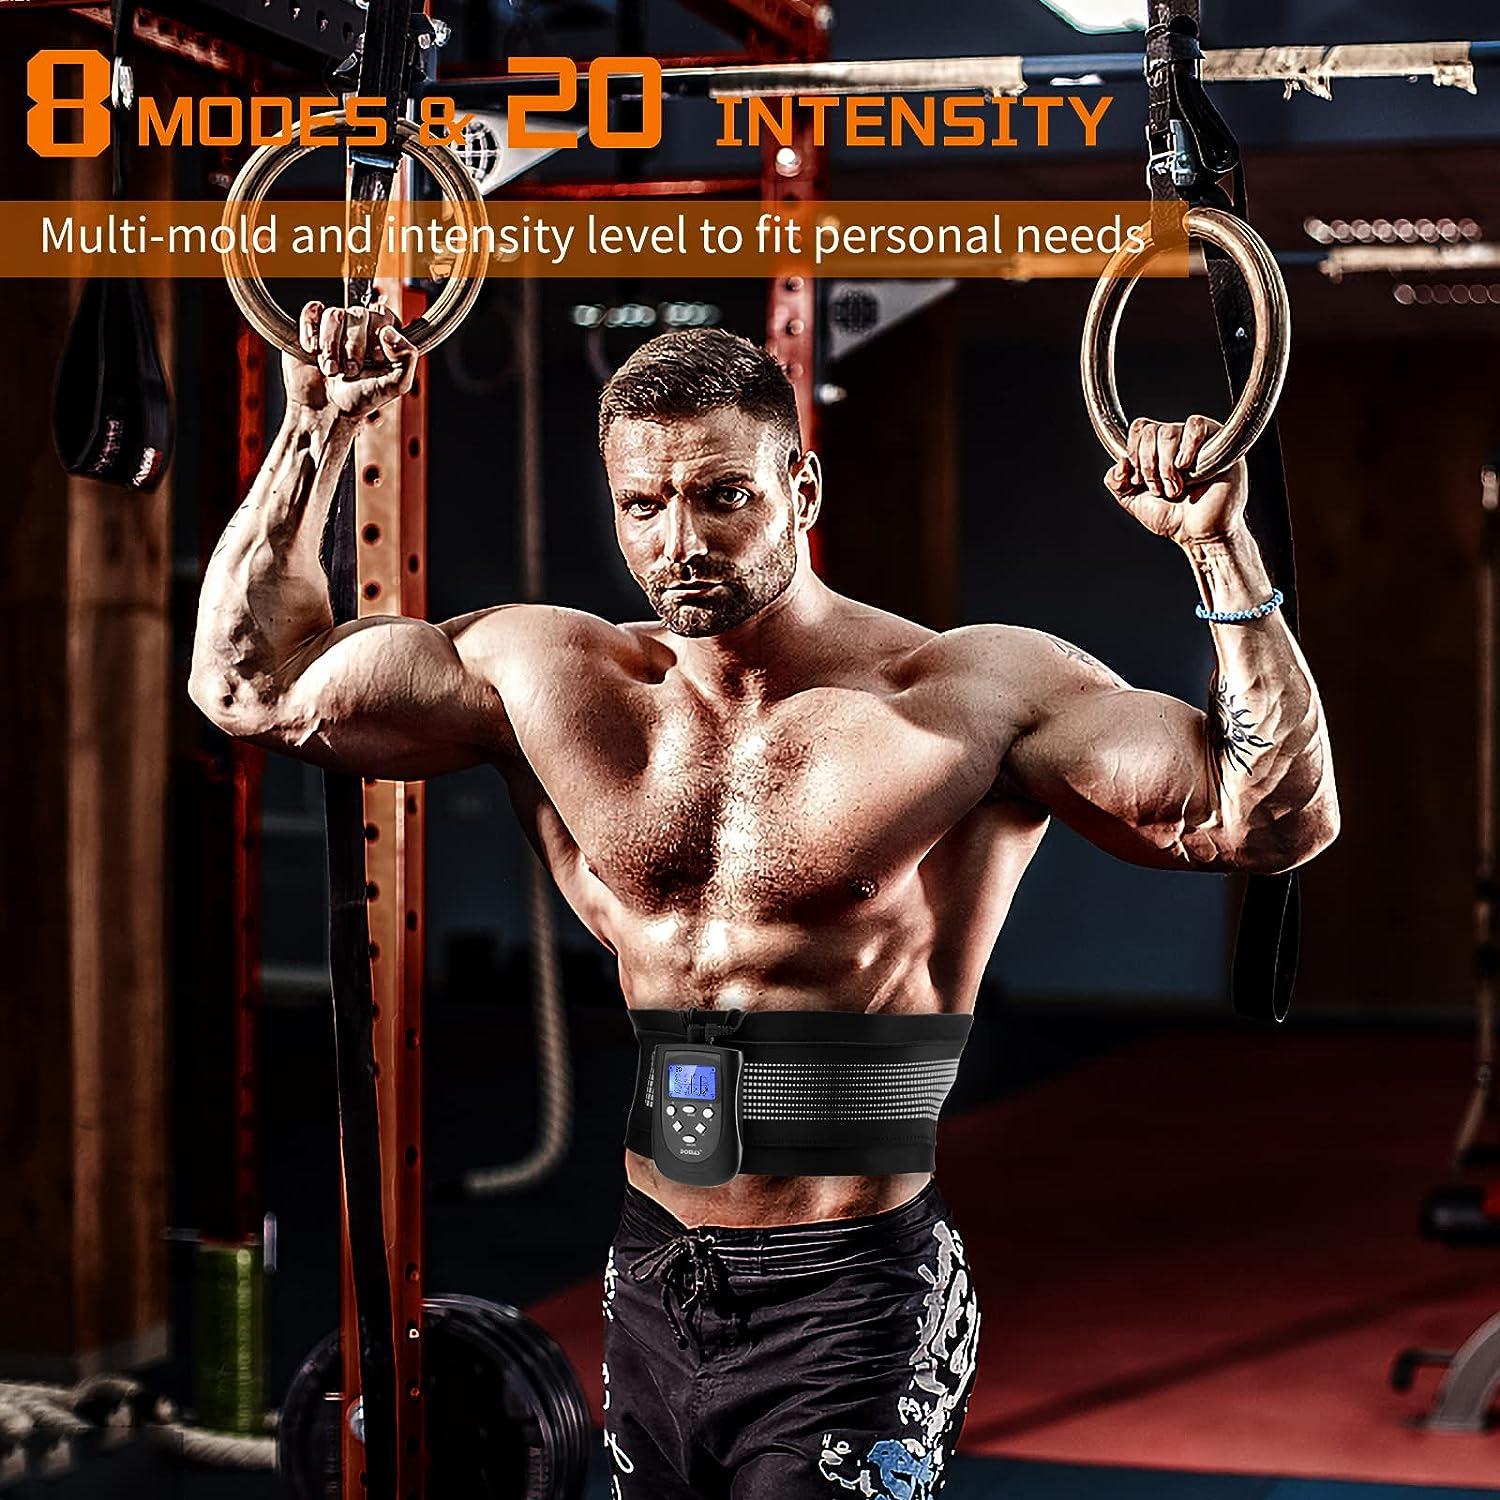 EMS Abdominal Muscle Toning Trainer ABS Stimulator Toner Fitness Gym Waist  Belt